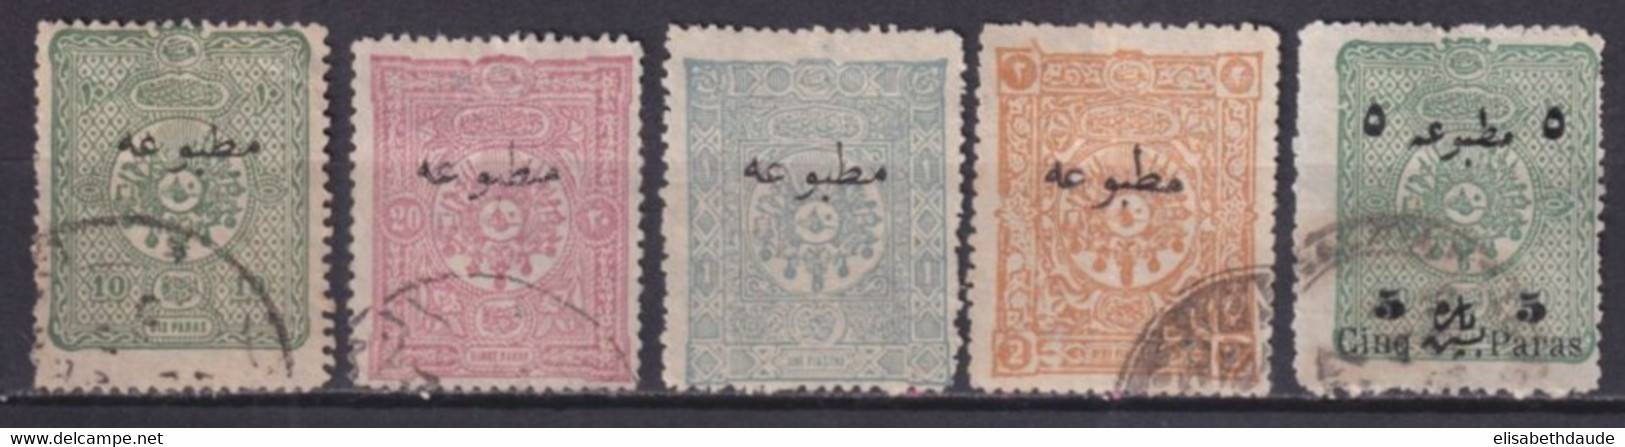 TURQUIE - 1894 - JOURNAUX YVERT N°12/15+16A OBLITERES - - Used Stamps